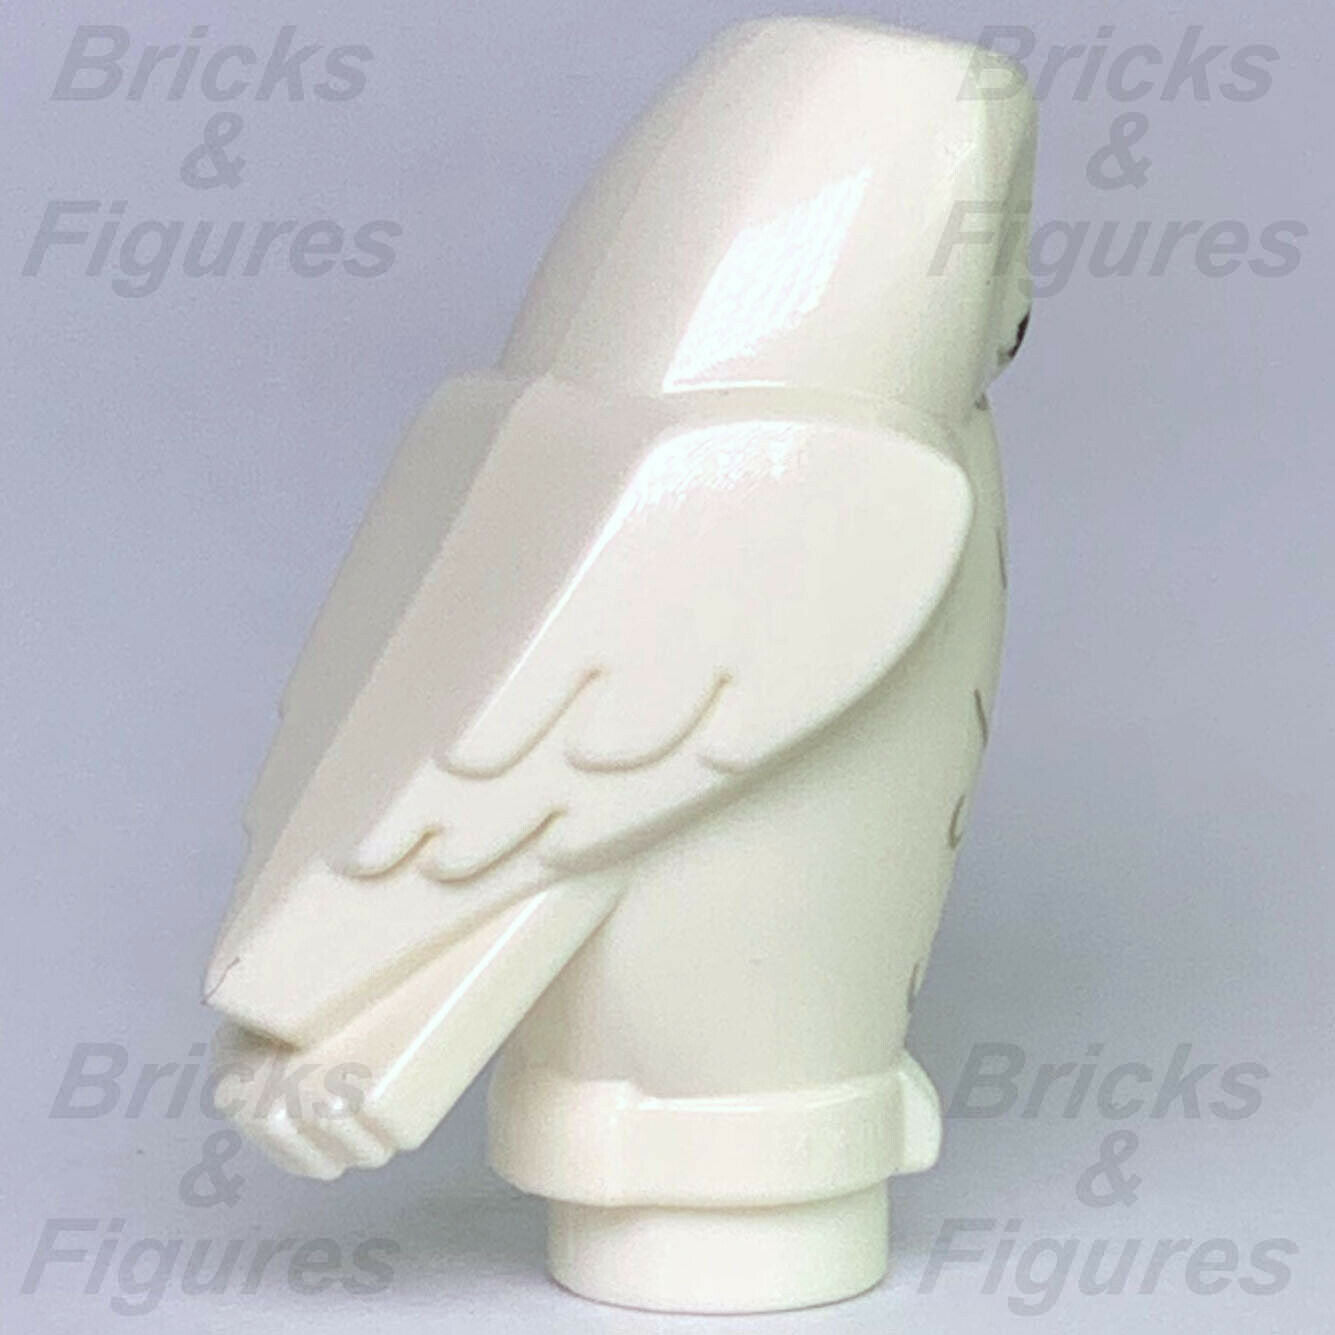 New Harry Potter LEGO Hedwig White Owl Bird Animal Part 4842 4841 75954 75953 - Bricks & Figures